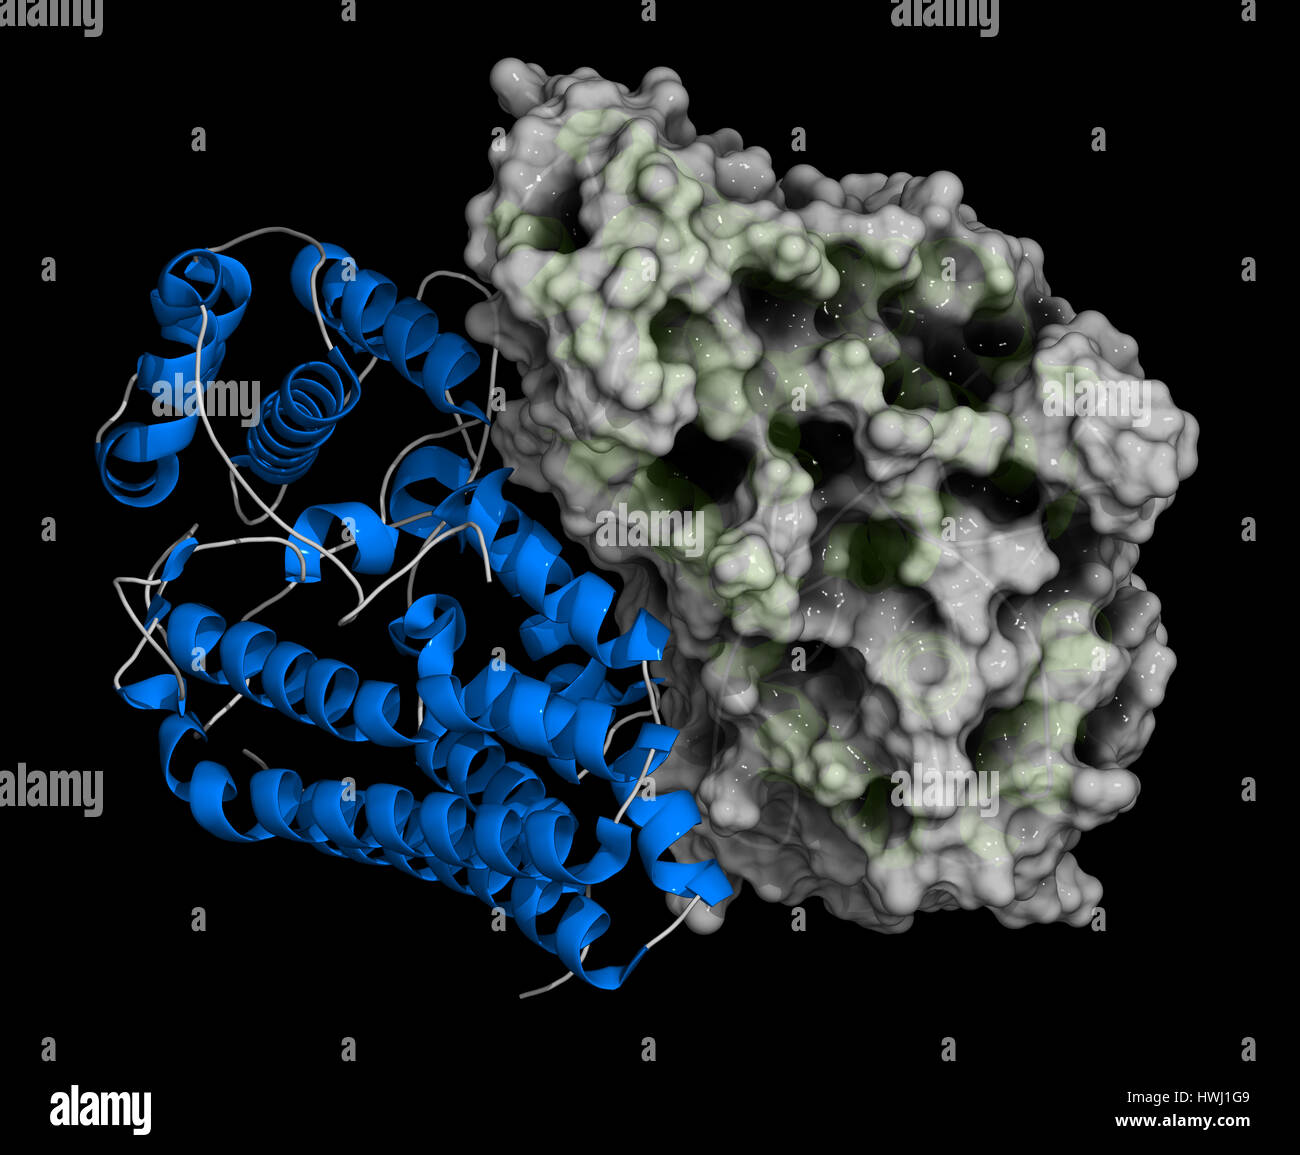 Indoleamine 2,3 dioxygenase 1 (IDO1) protein. Tryptophan catabolic enzyme of the kynurenine pathway. 3D illustration. Cartoon representation combined  Stock Photo